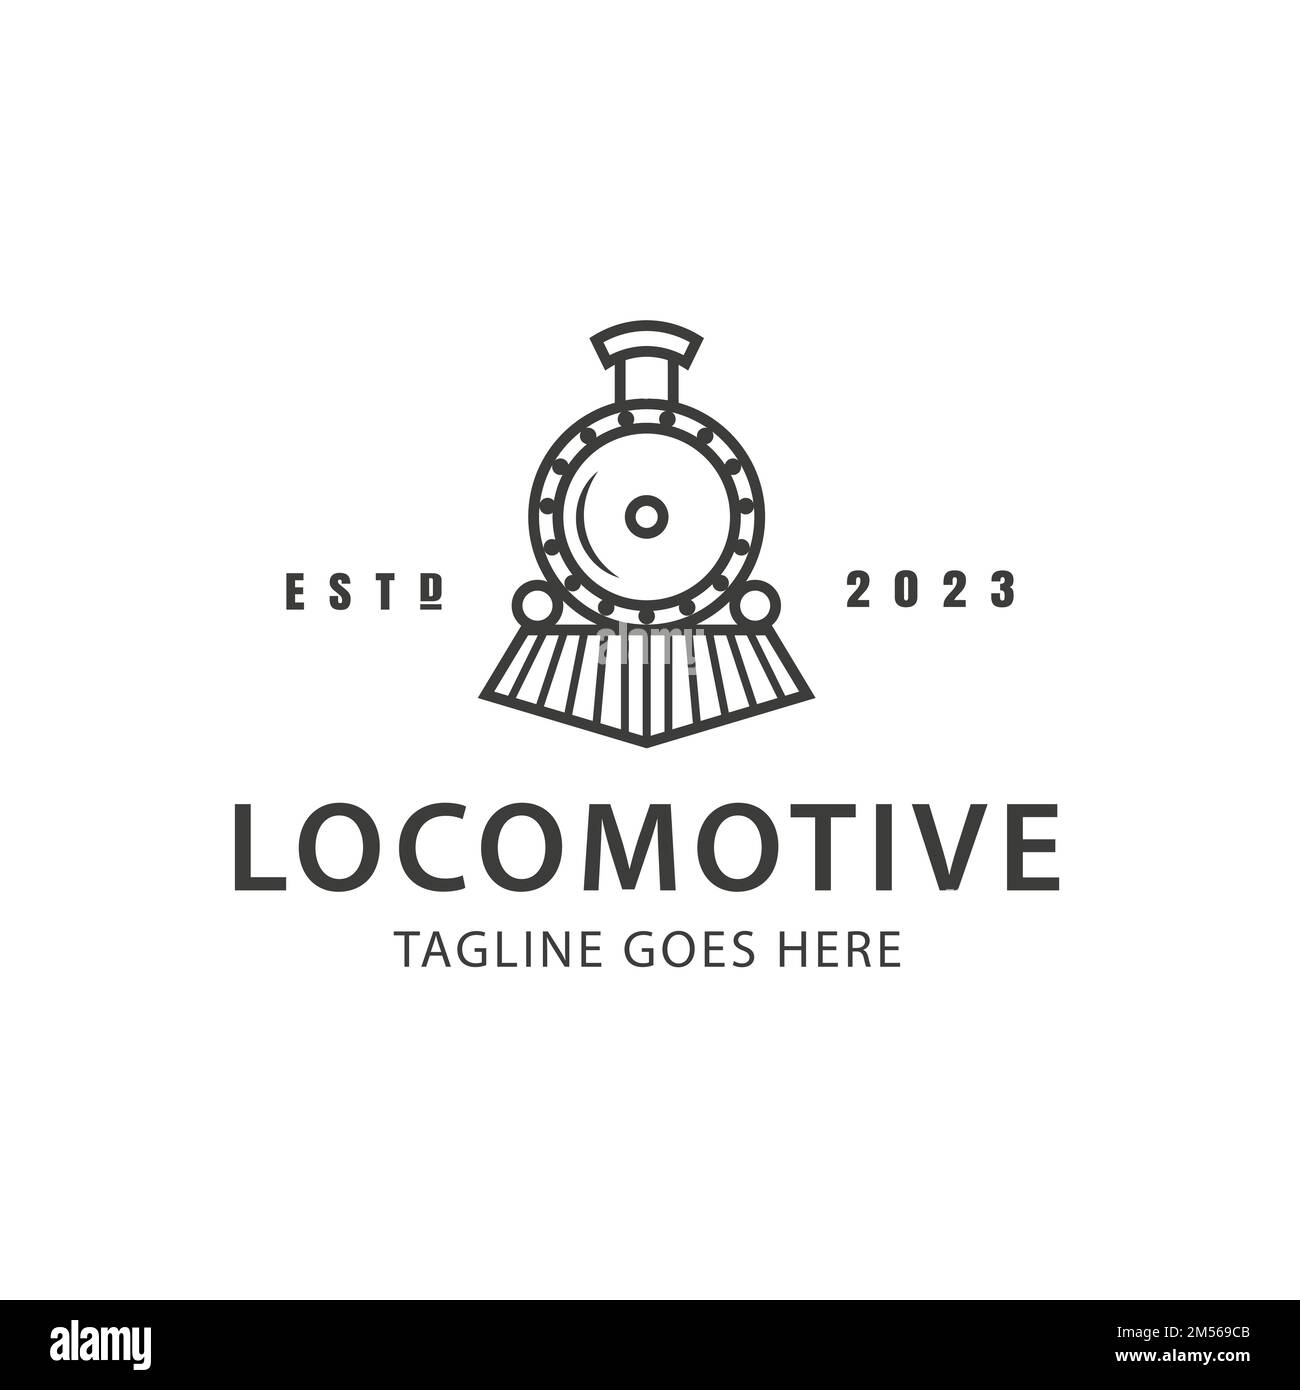 Vintage Old Locomotive Engine Logo Design Vector. Lokomotive Line Art Logo-Vektor-Illustration einfacher Minimalismus. Zugzeichen oder Symbo im Retro- oder Oldtimer-Stil Stock Vektor